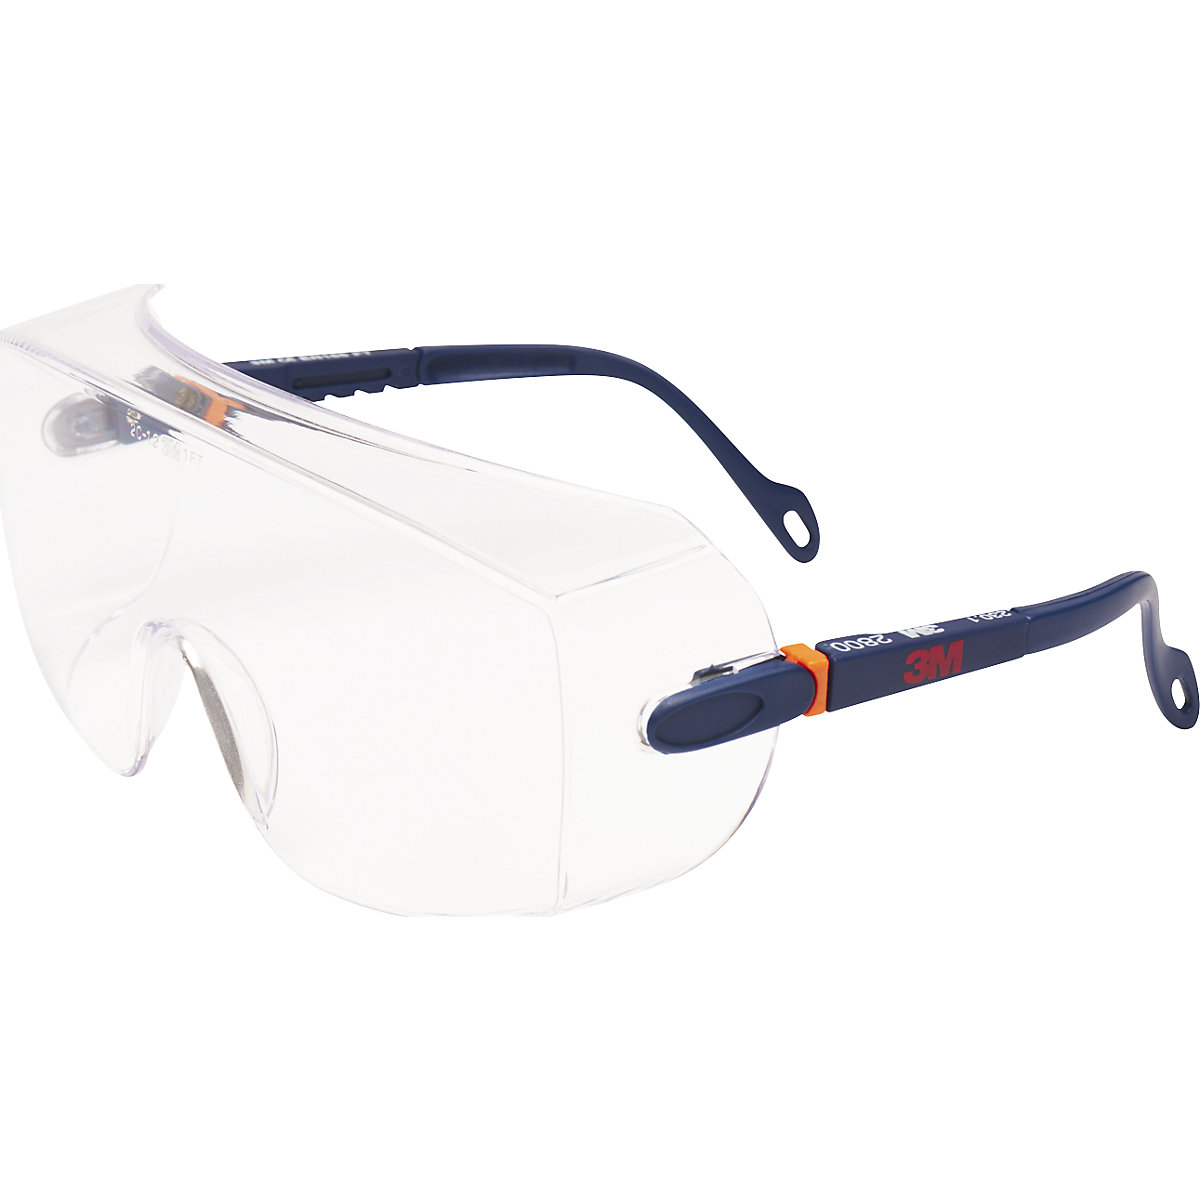 Ochelari de protecție purtați deasupra altor ochelari 2800 – 3M